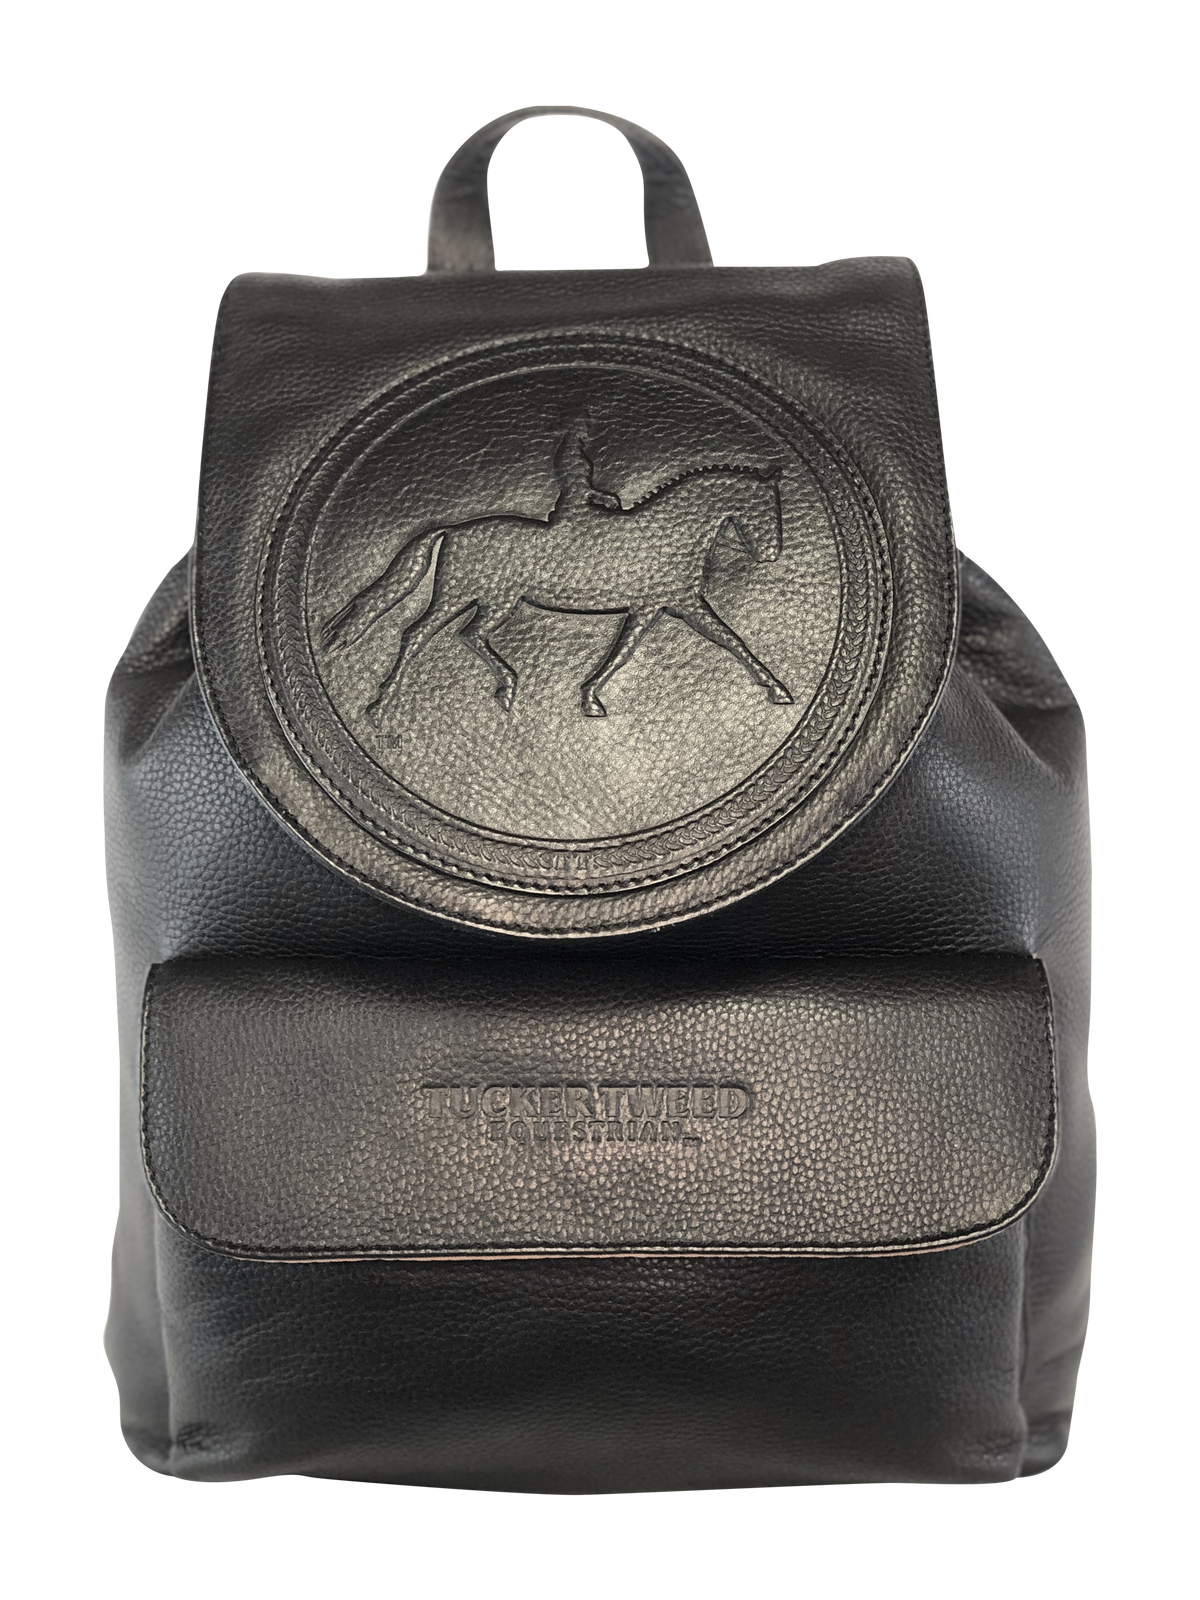 Tucker Tweed Equestrian Leather Handbags Dressage Black Brandywine Backpack: Dressage